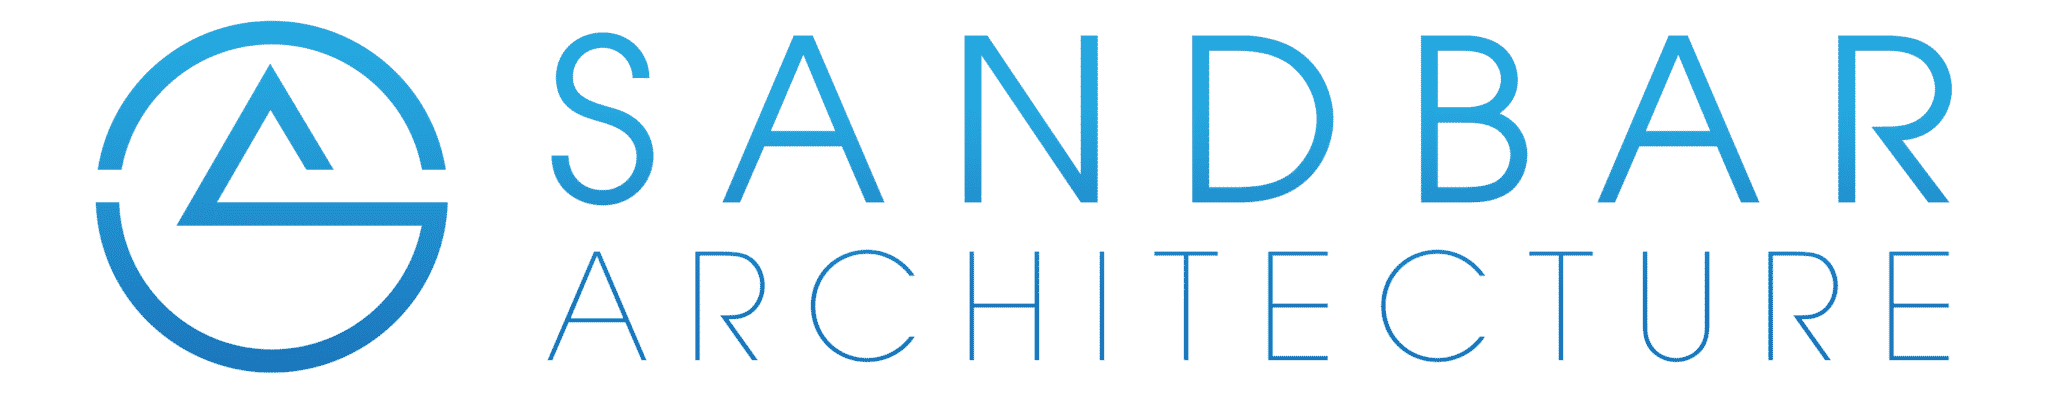 Sandbar Architecture Logo